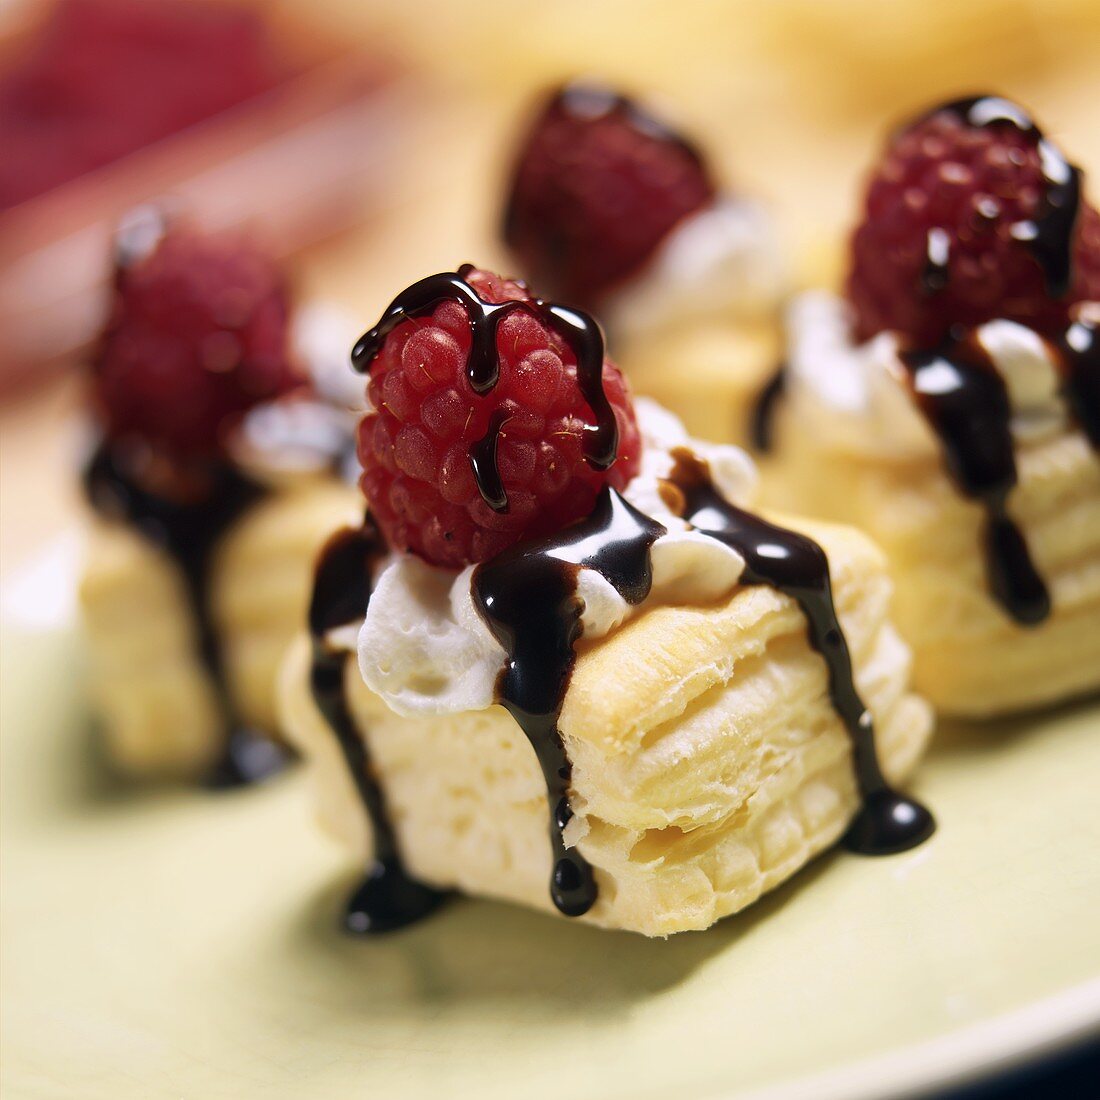 Puff pastry slices with cream, chocolate sauce & raspberries